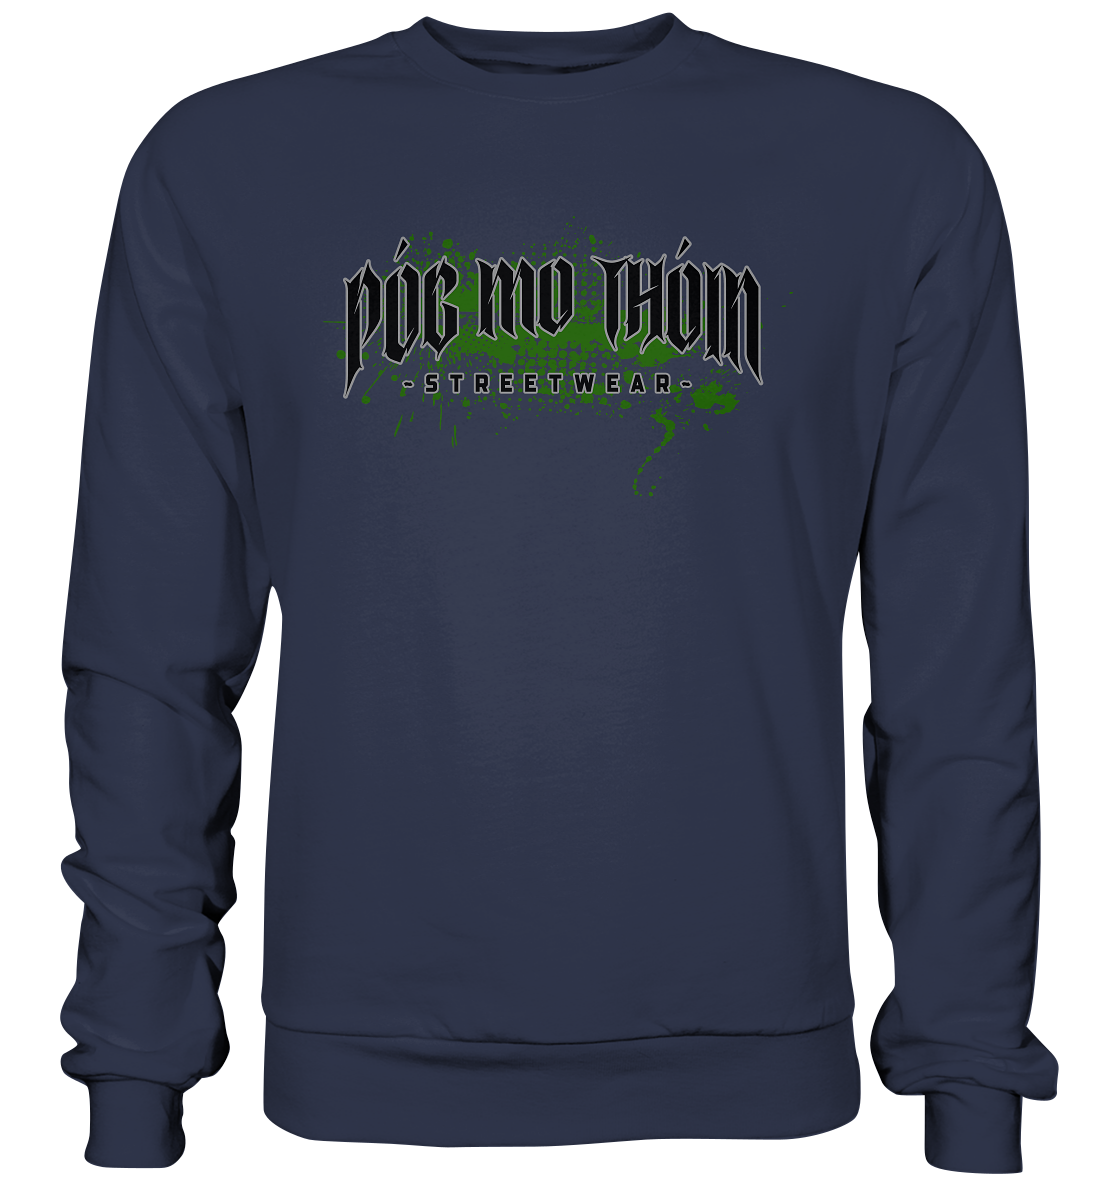 Póg Mo Thóin Streetwear "Splatter Logo" - Premium Sweatshirt